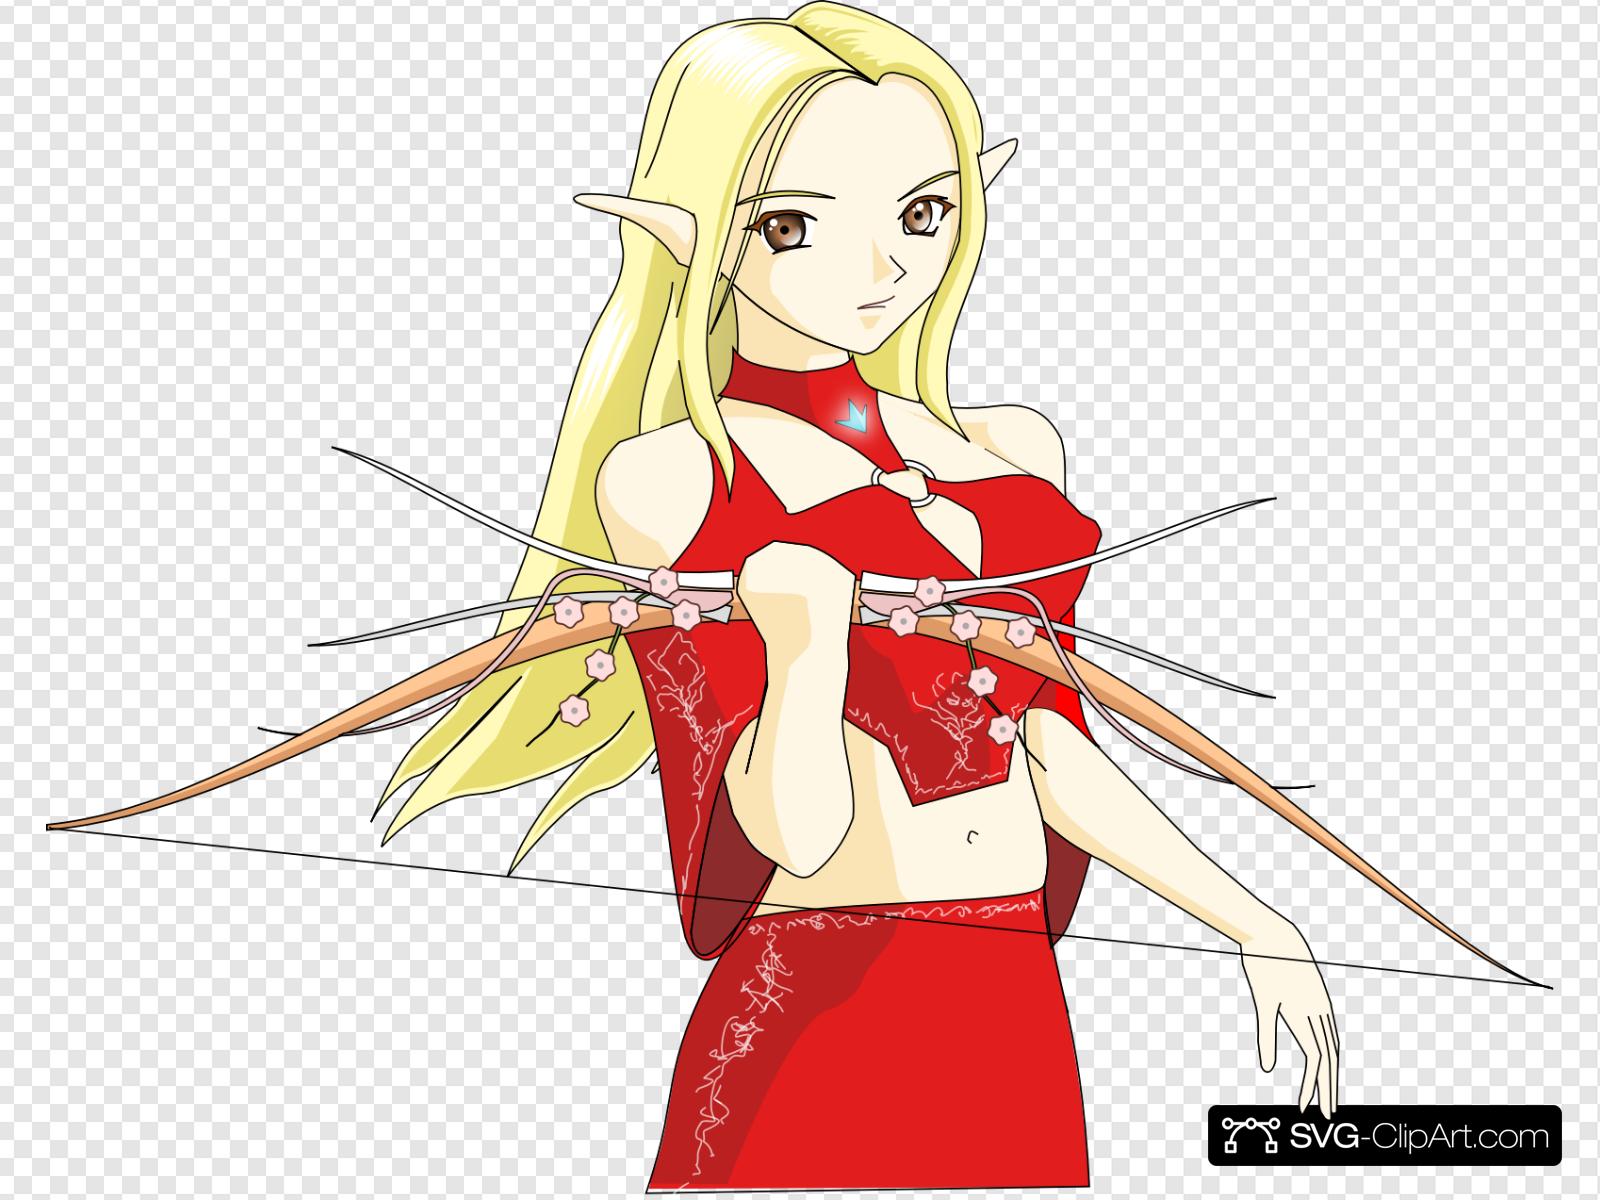 Anime Elf Archer Clip art, Icon and SVG.